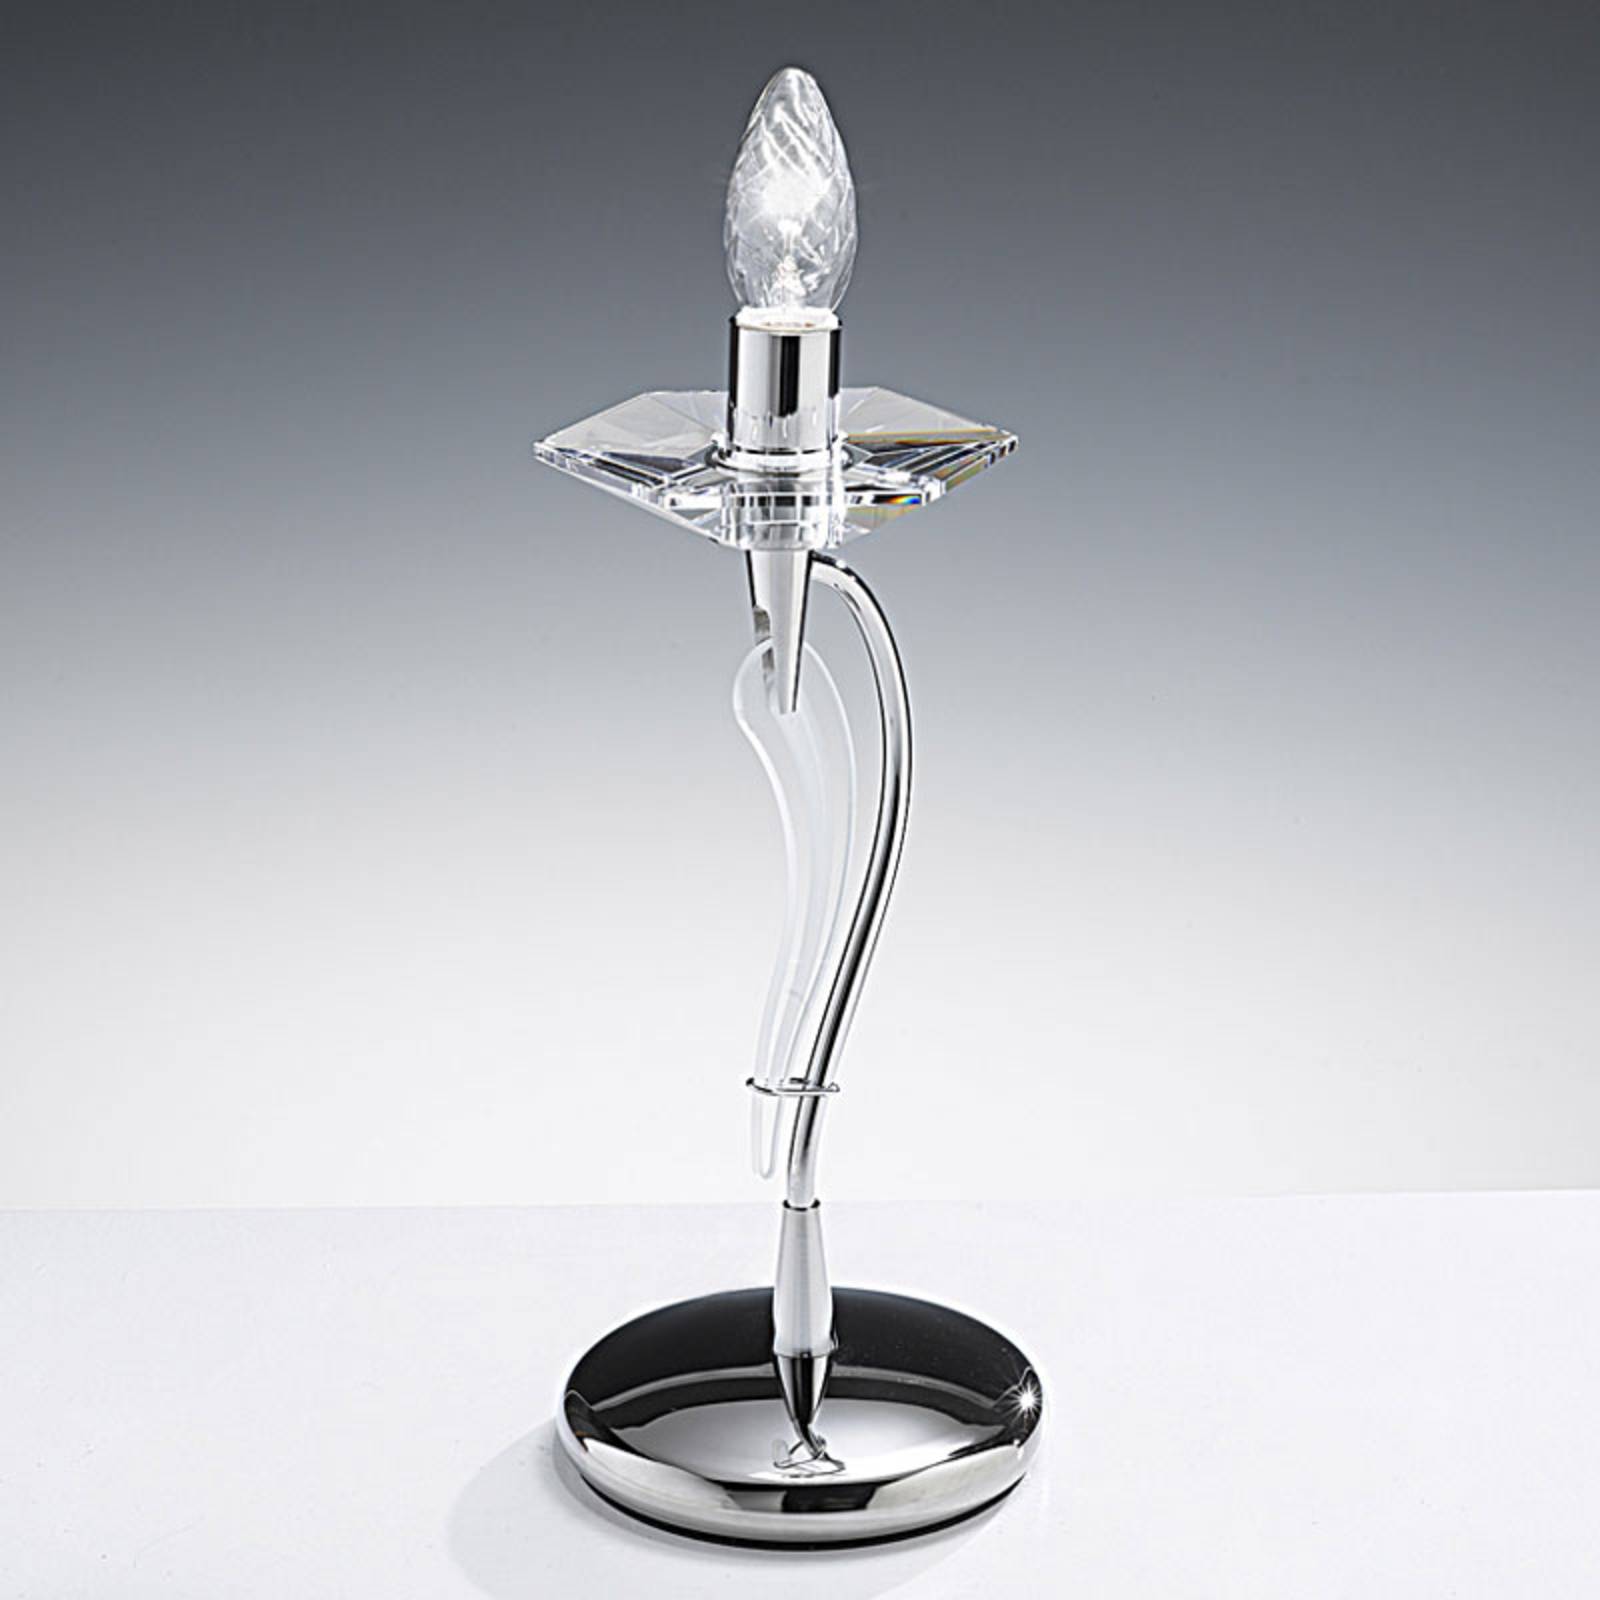 metallux lampe à poser icaro 1 lampe, verre cristal, chromé